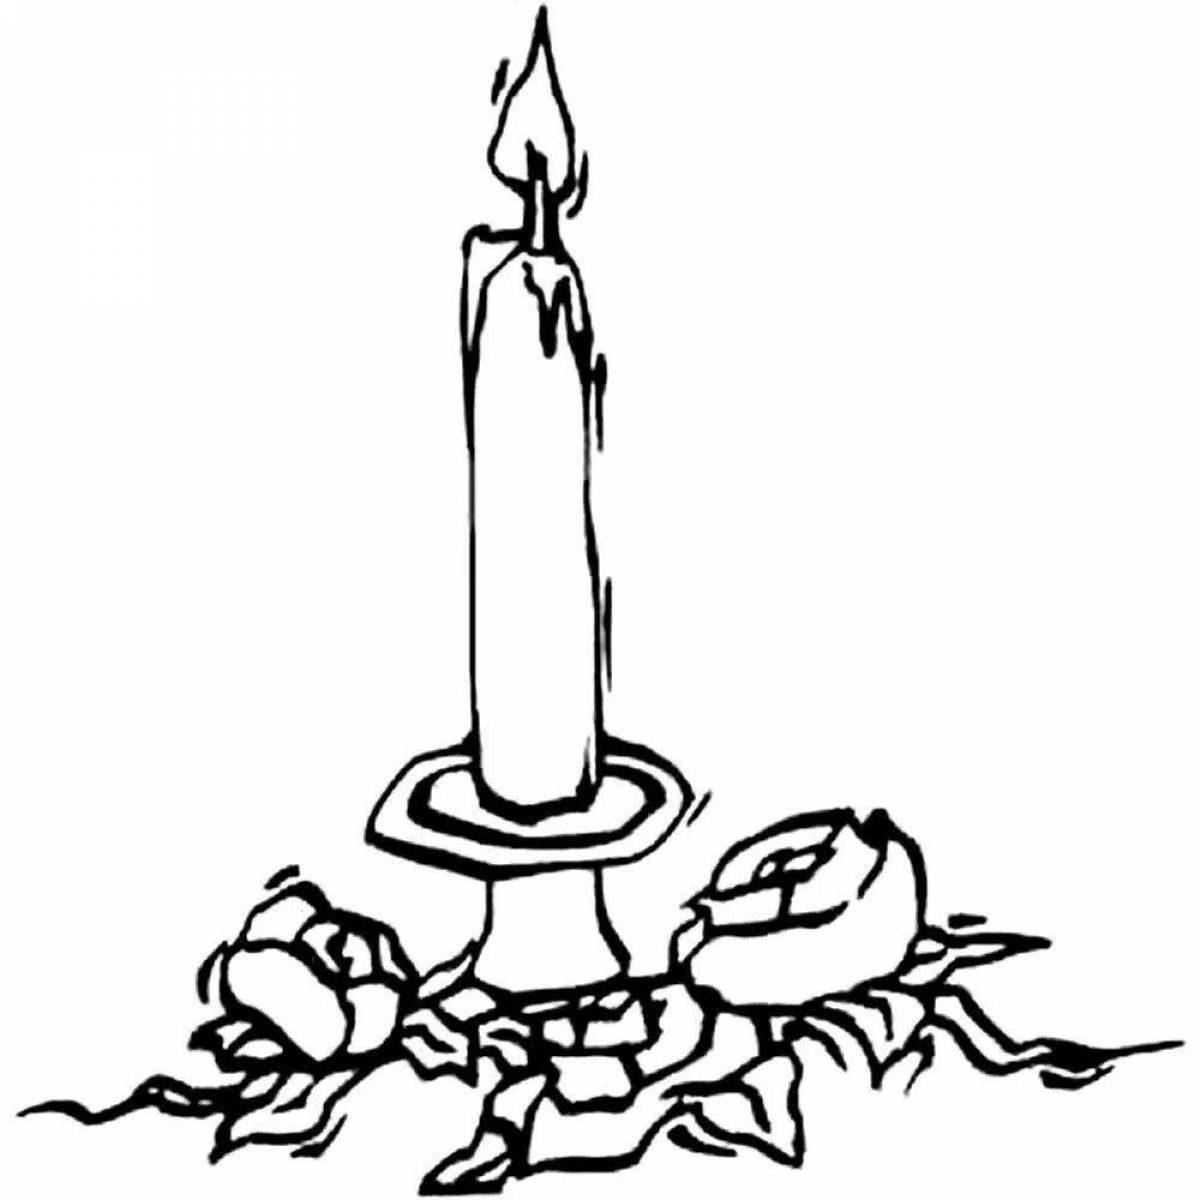 Memorial Candle #1